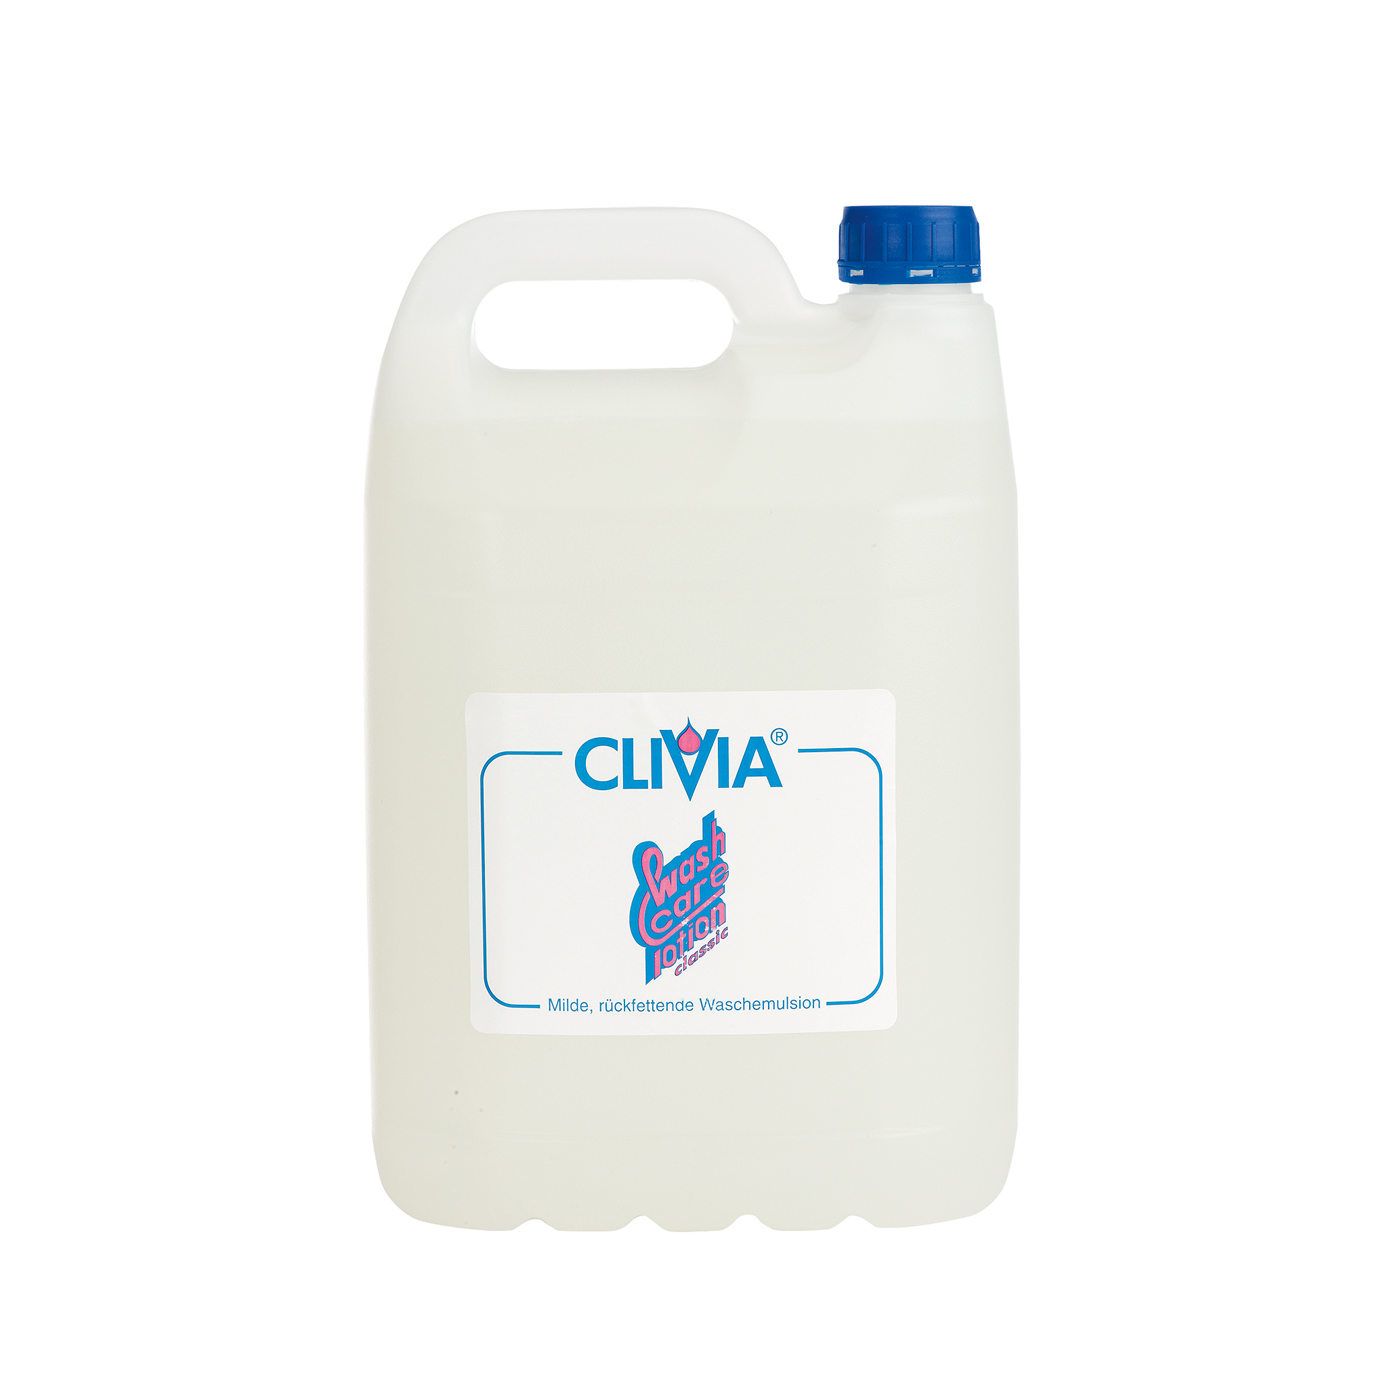 Clivia Clivia classic Waschemulsion - 5000 ml